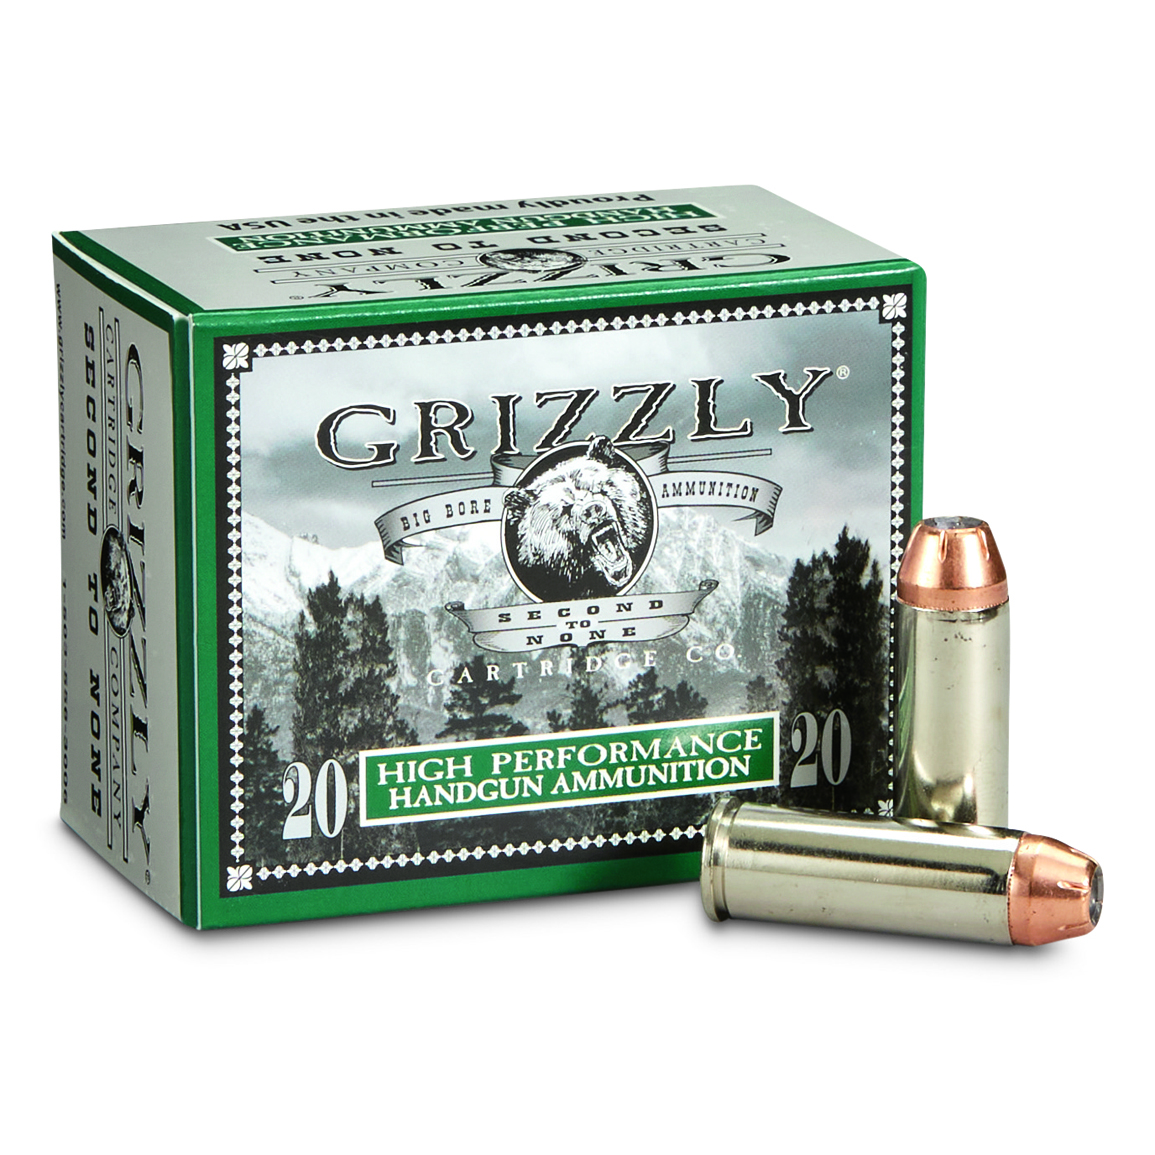 Grizzly Cartridge Co. High Performance Handgun, .45 Colt, JHP, 225 Grain, 20 Rounds